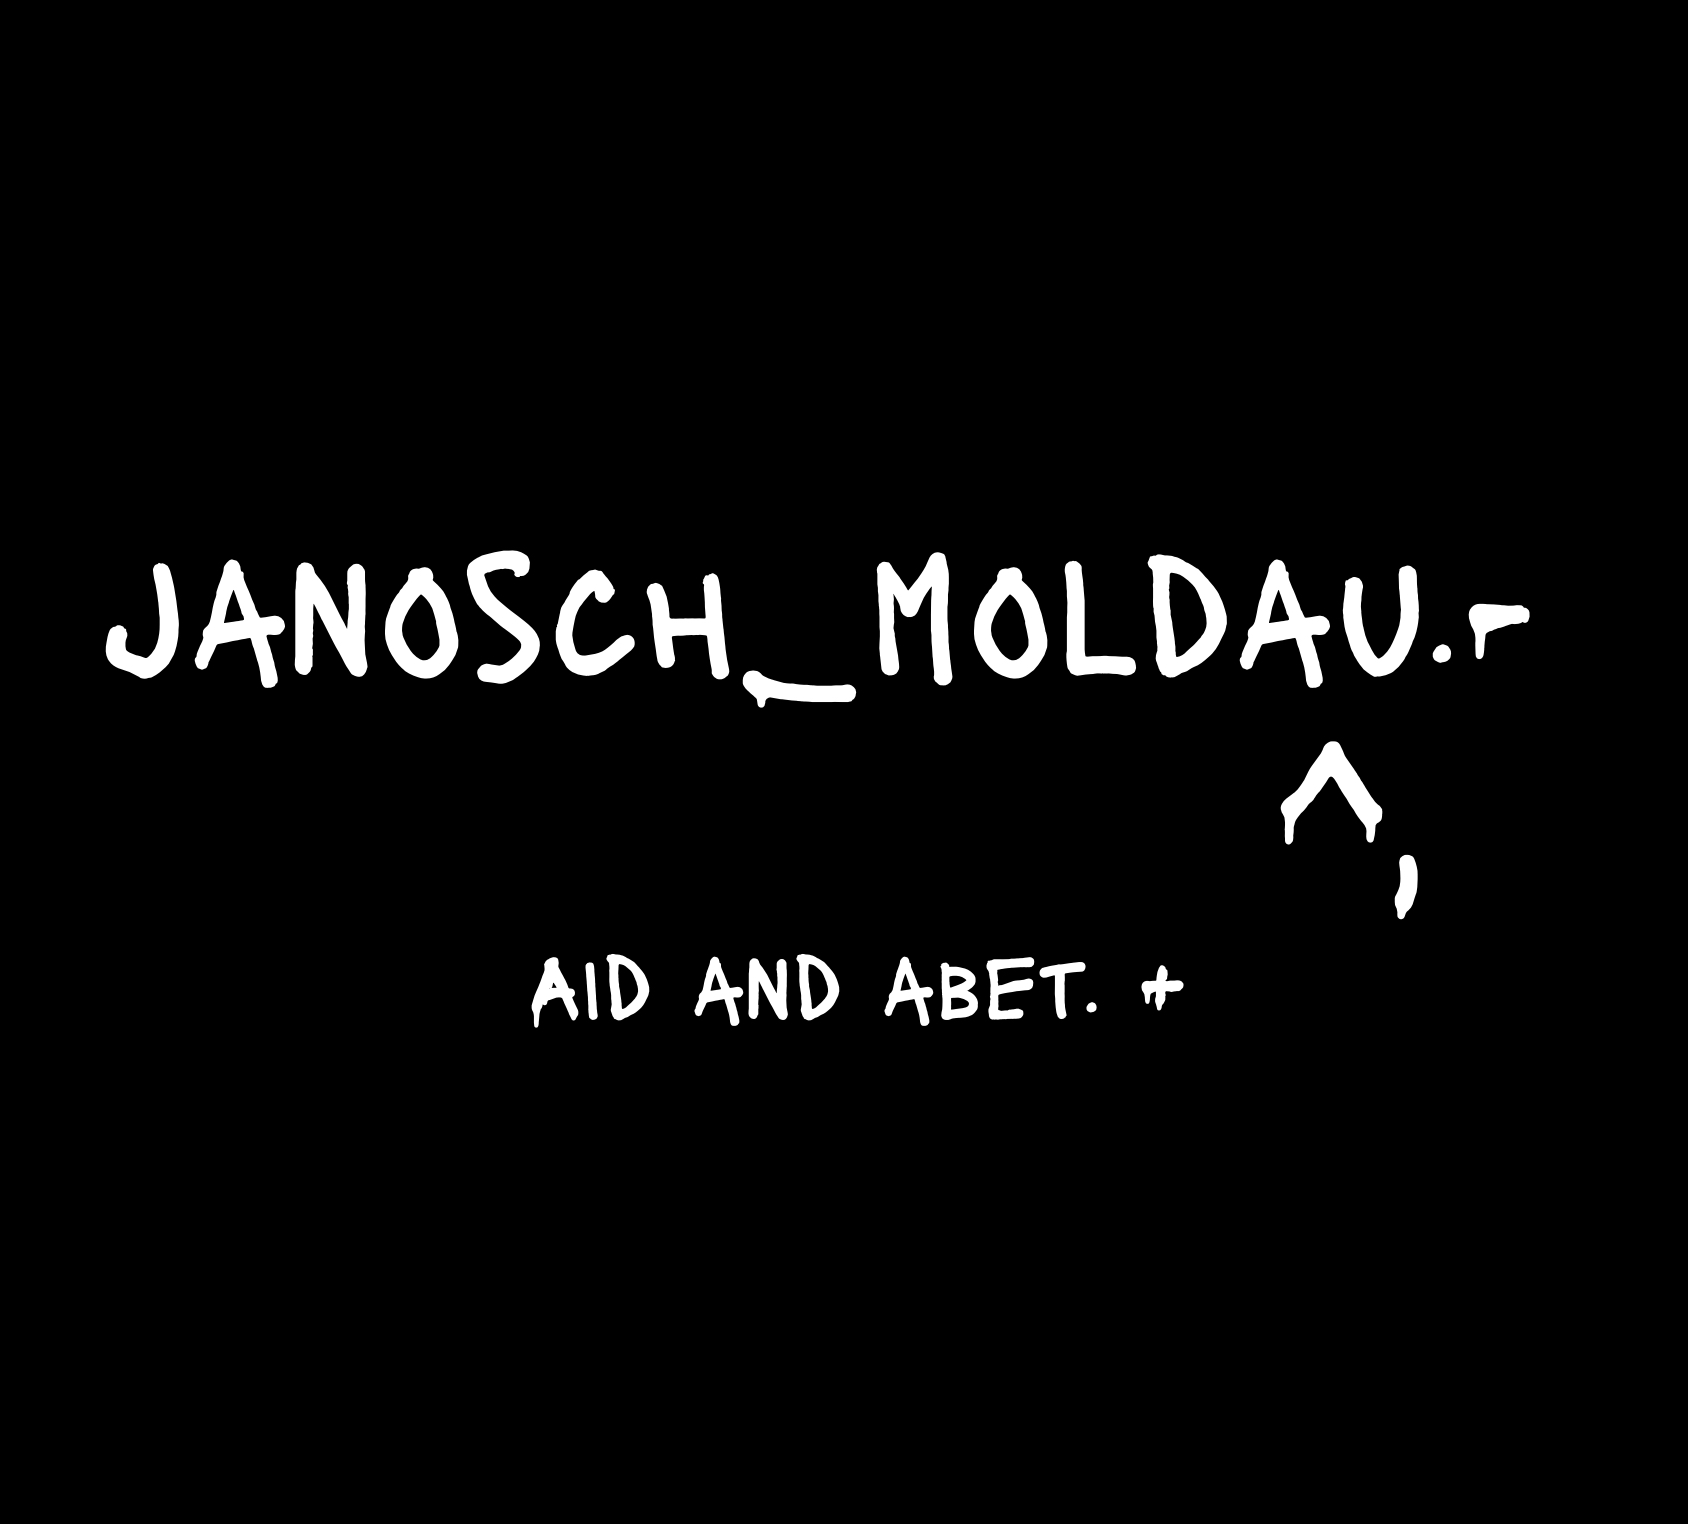 janosch moldau aid and abet ep bundle